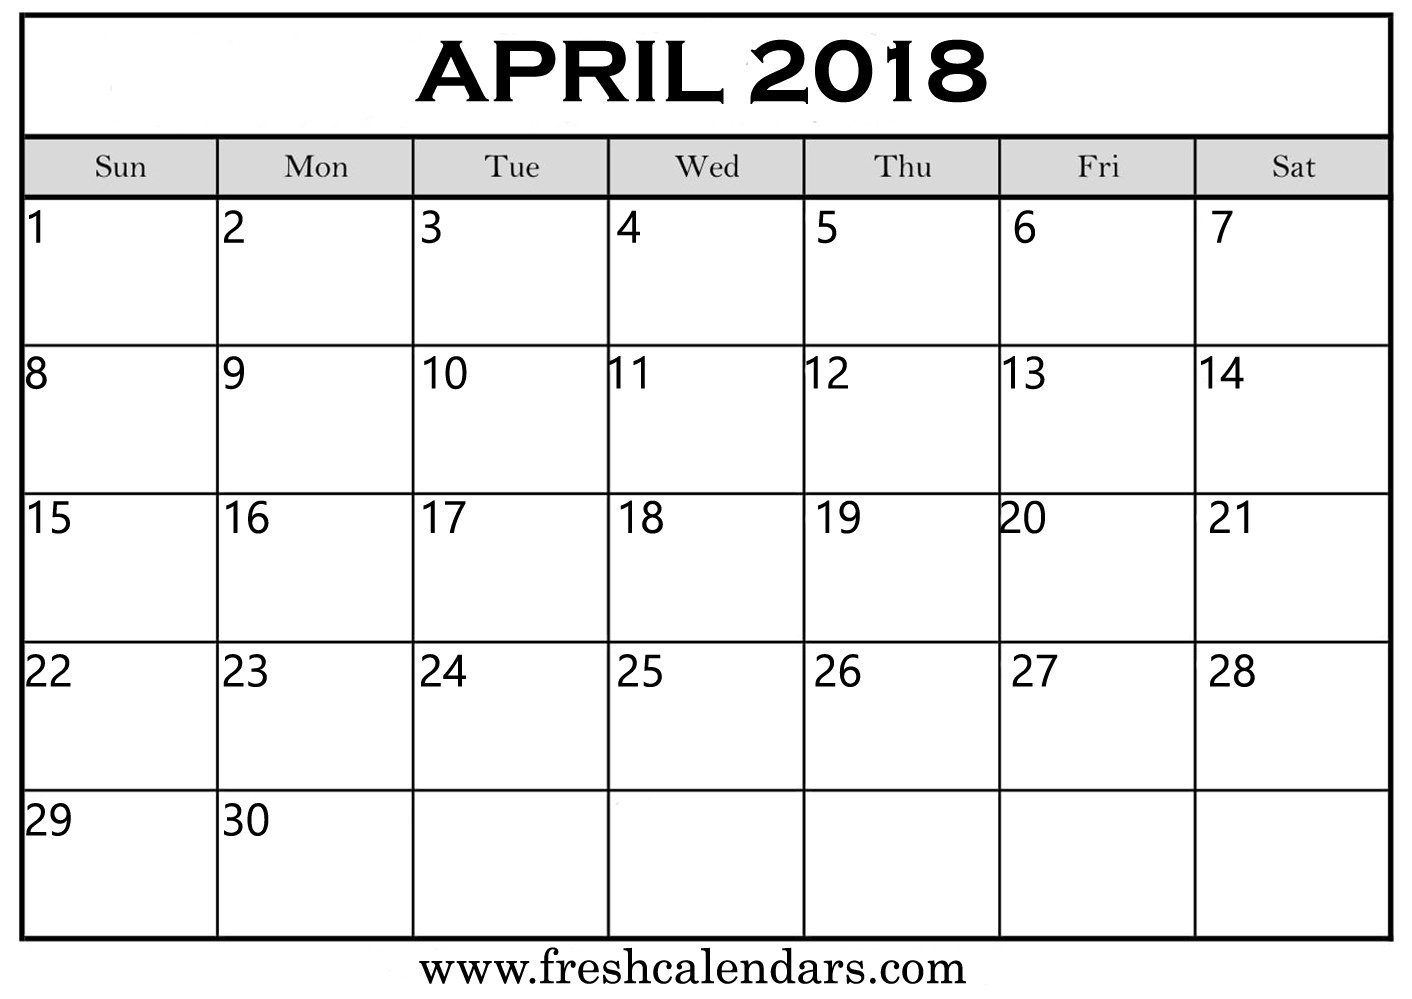 Imom Calendar 2018 Planner Calendar 2018 Printable Kleoachfix | Jazz for Imom 2020 Calendar